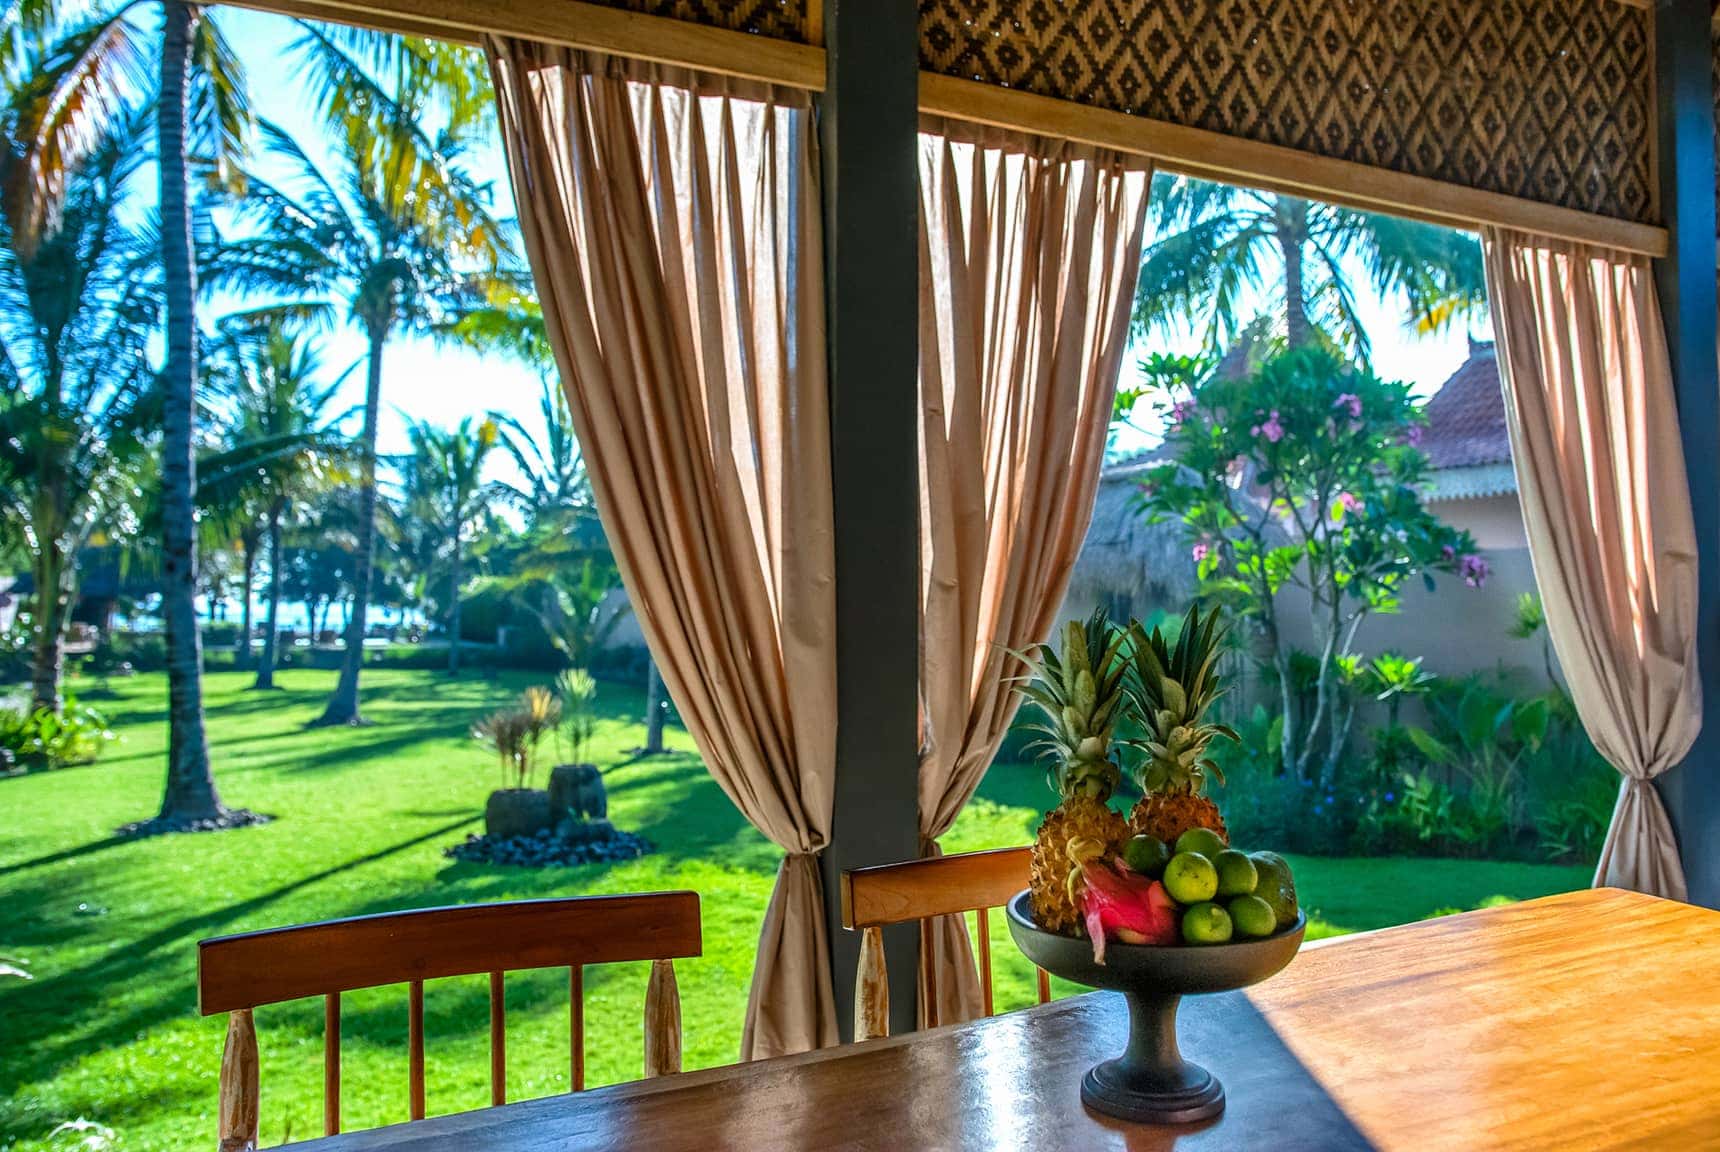 Beach Villa - Pantai Sire, Lombok Indonesia (Bali villa photography by master photographer Rick Carmichael of LuxViz)